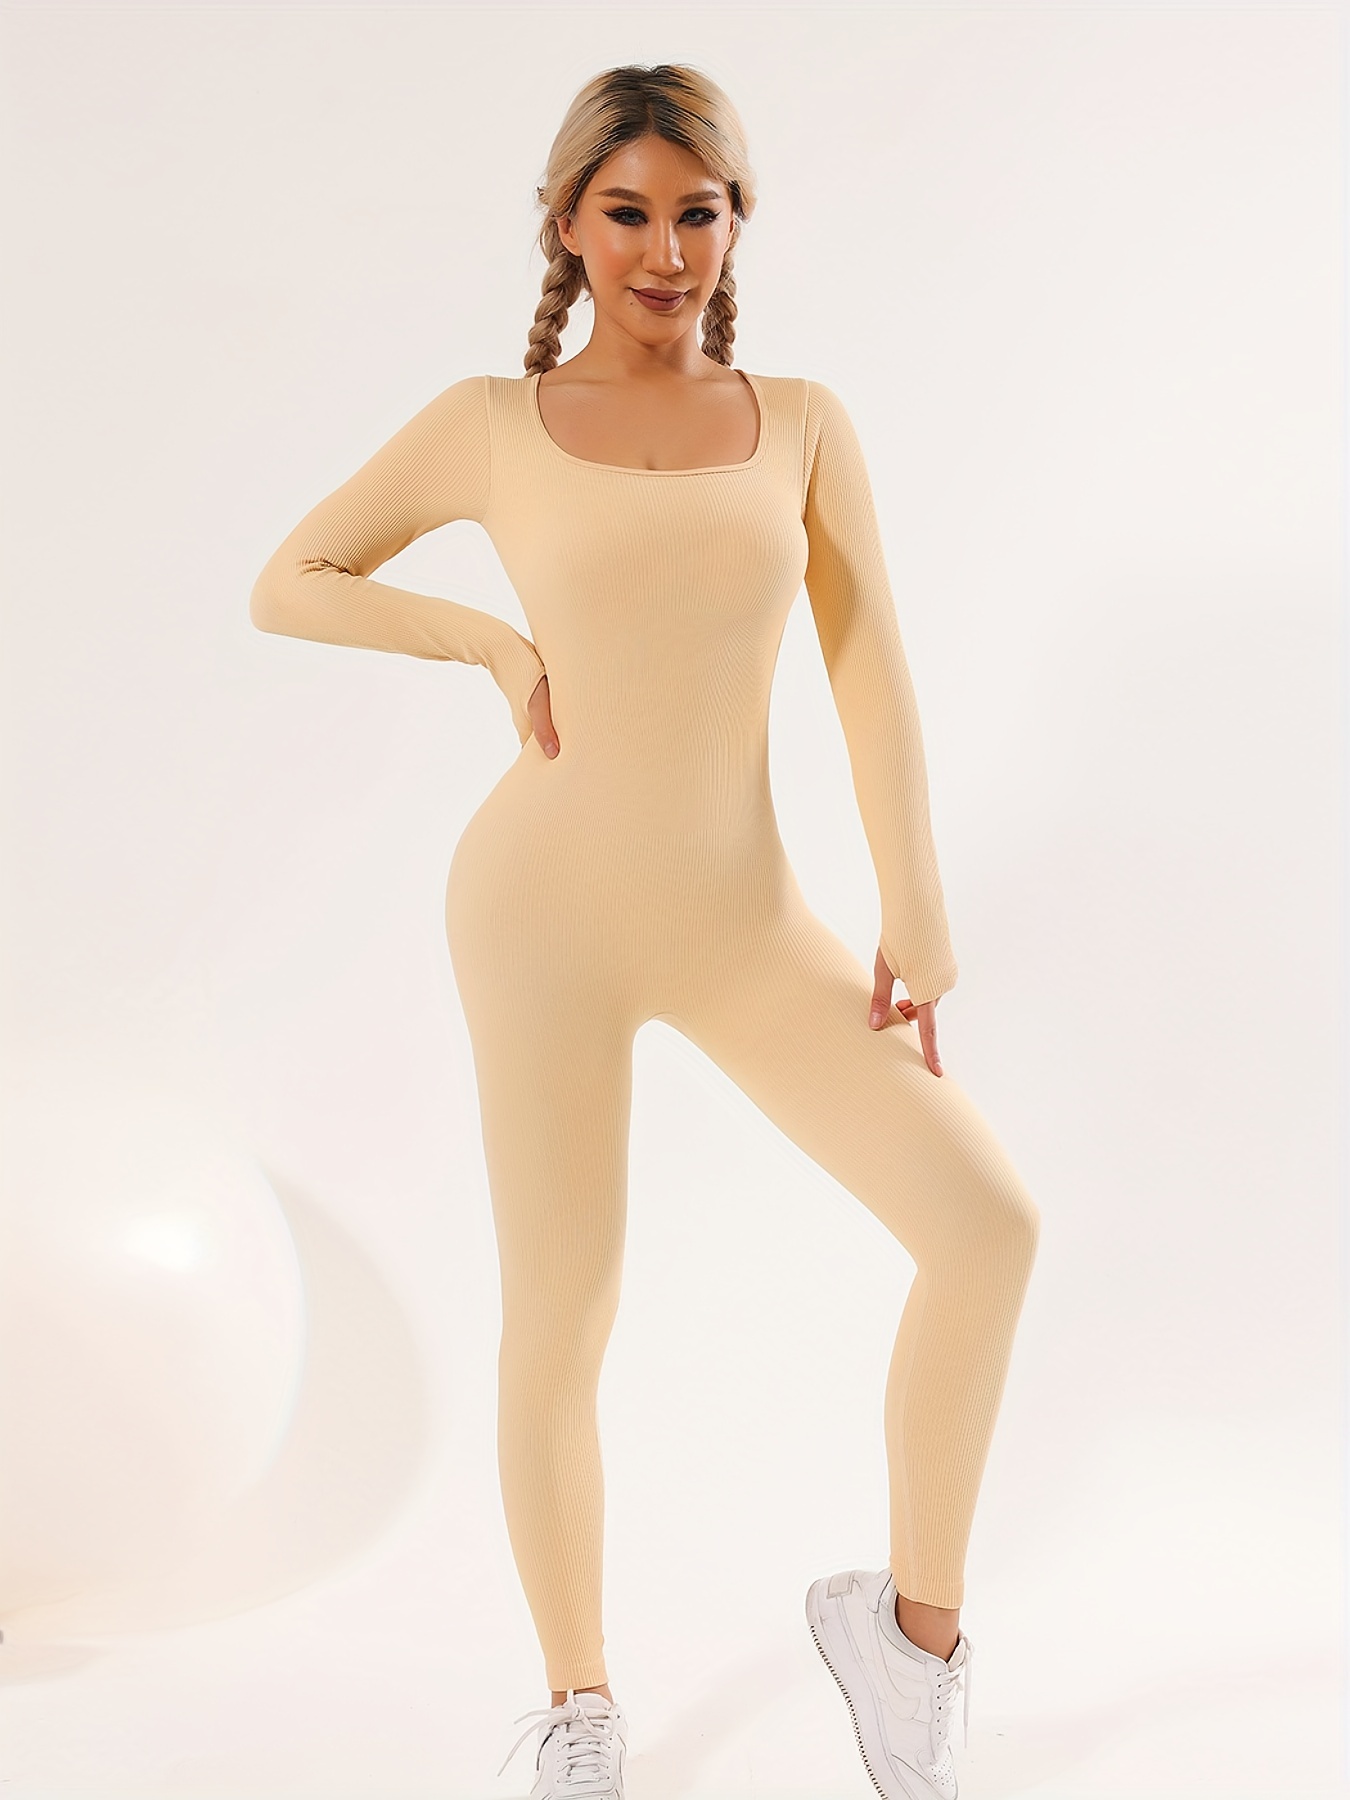 Women's Slimming Underwear Bodysuit Jumsuit Body Shaper Waist